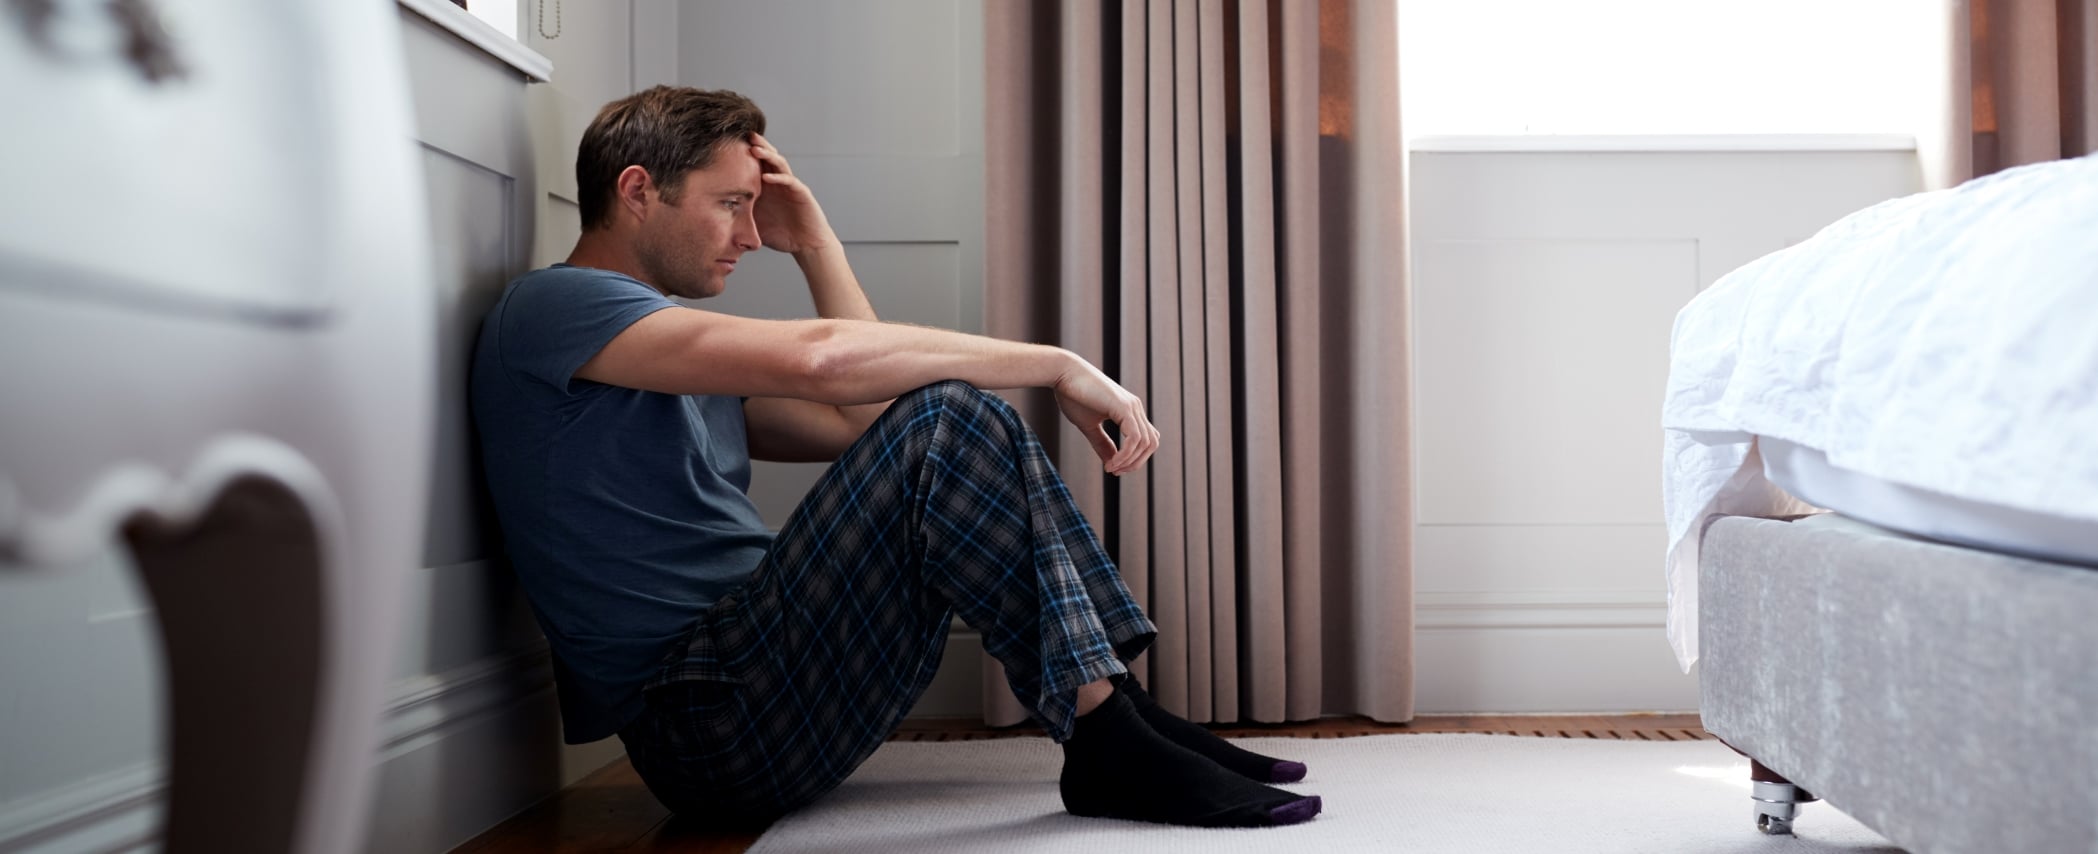 depressed-man-wearing-pajamas-sitting-on-floor-of-2021-08-26-16-14-53-utc